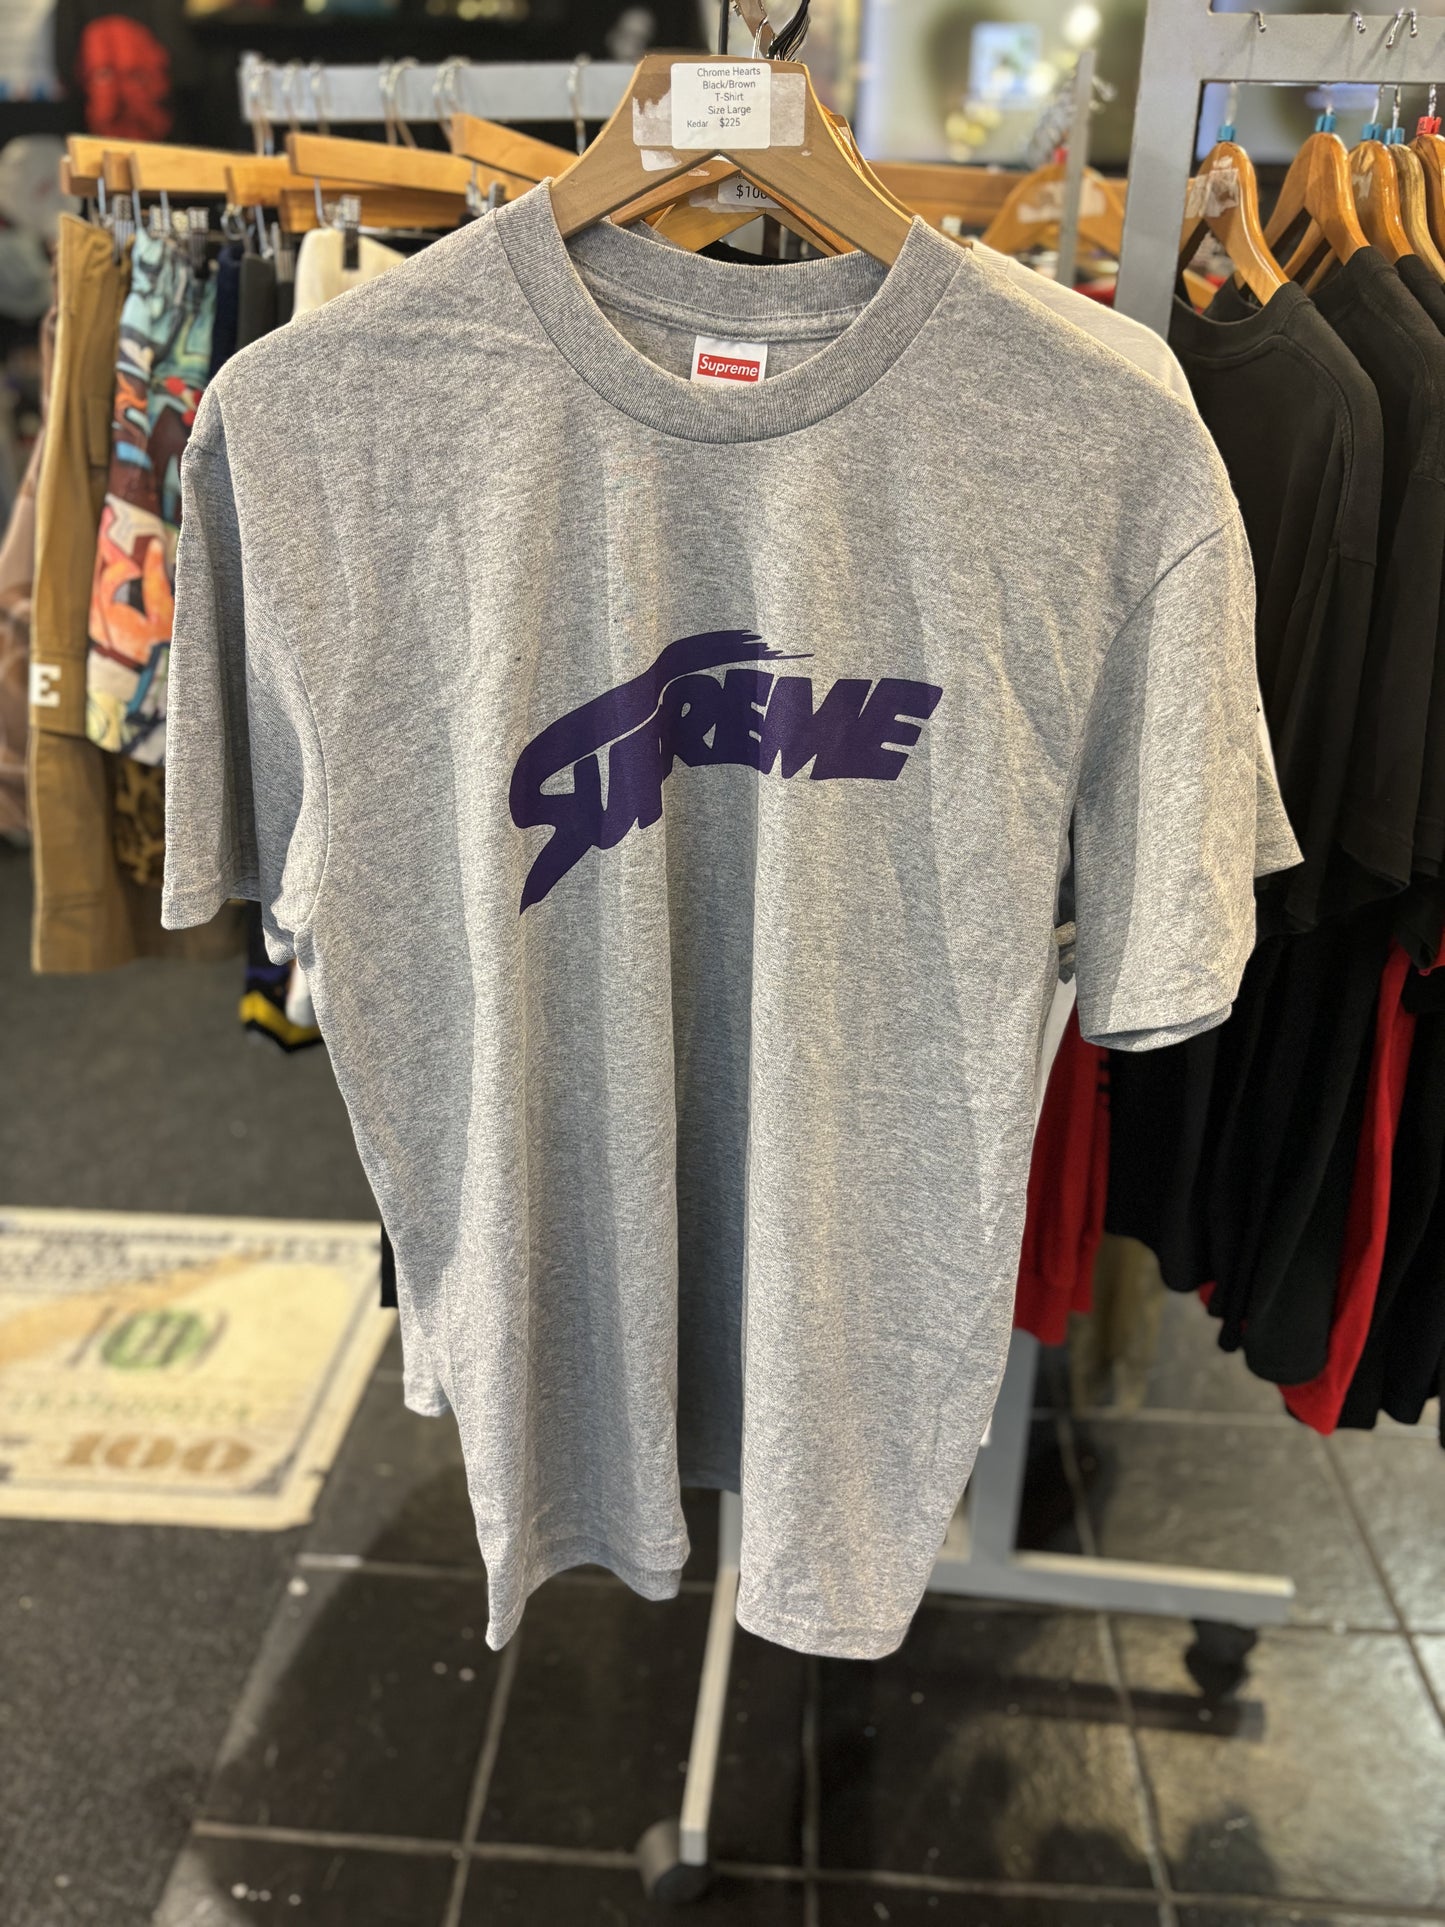 Men’s Supreme Grey/Purple Mont Blanc Size Medium & Large $100